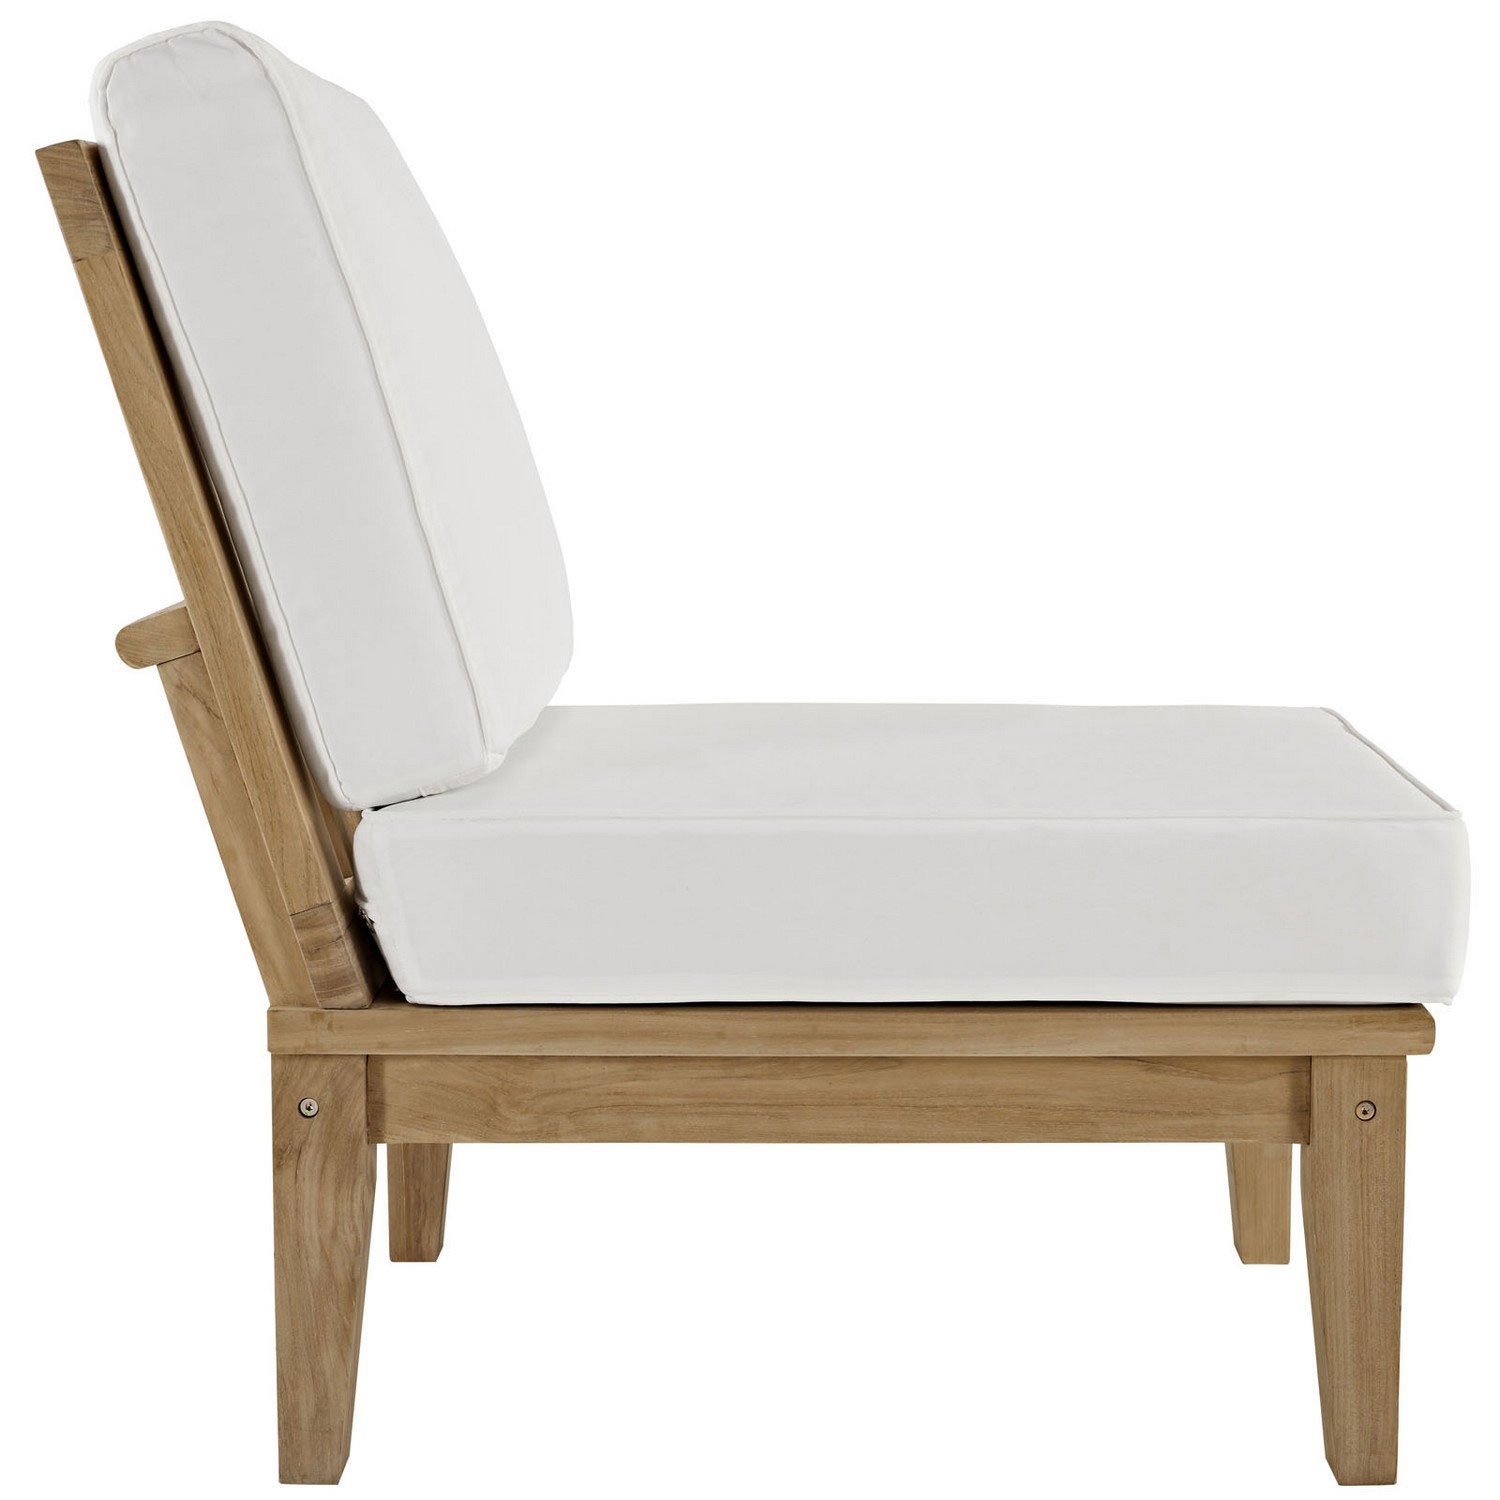 Modway Marina 2 Piece Outdoor Patio Teak Sofa Set - Natural White